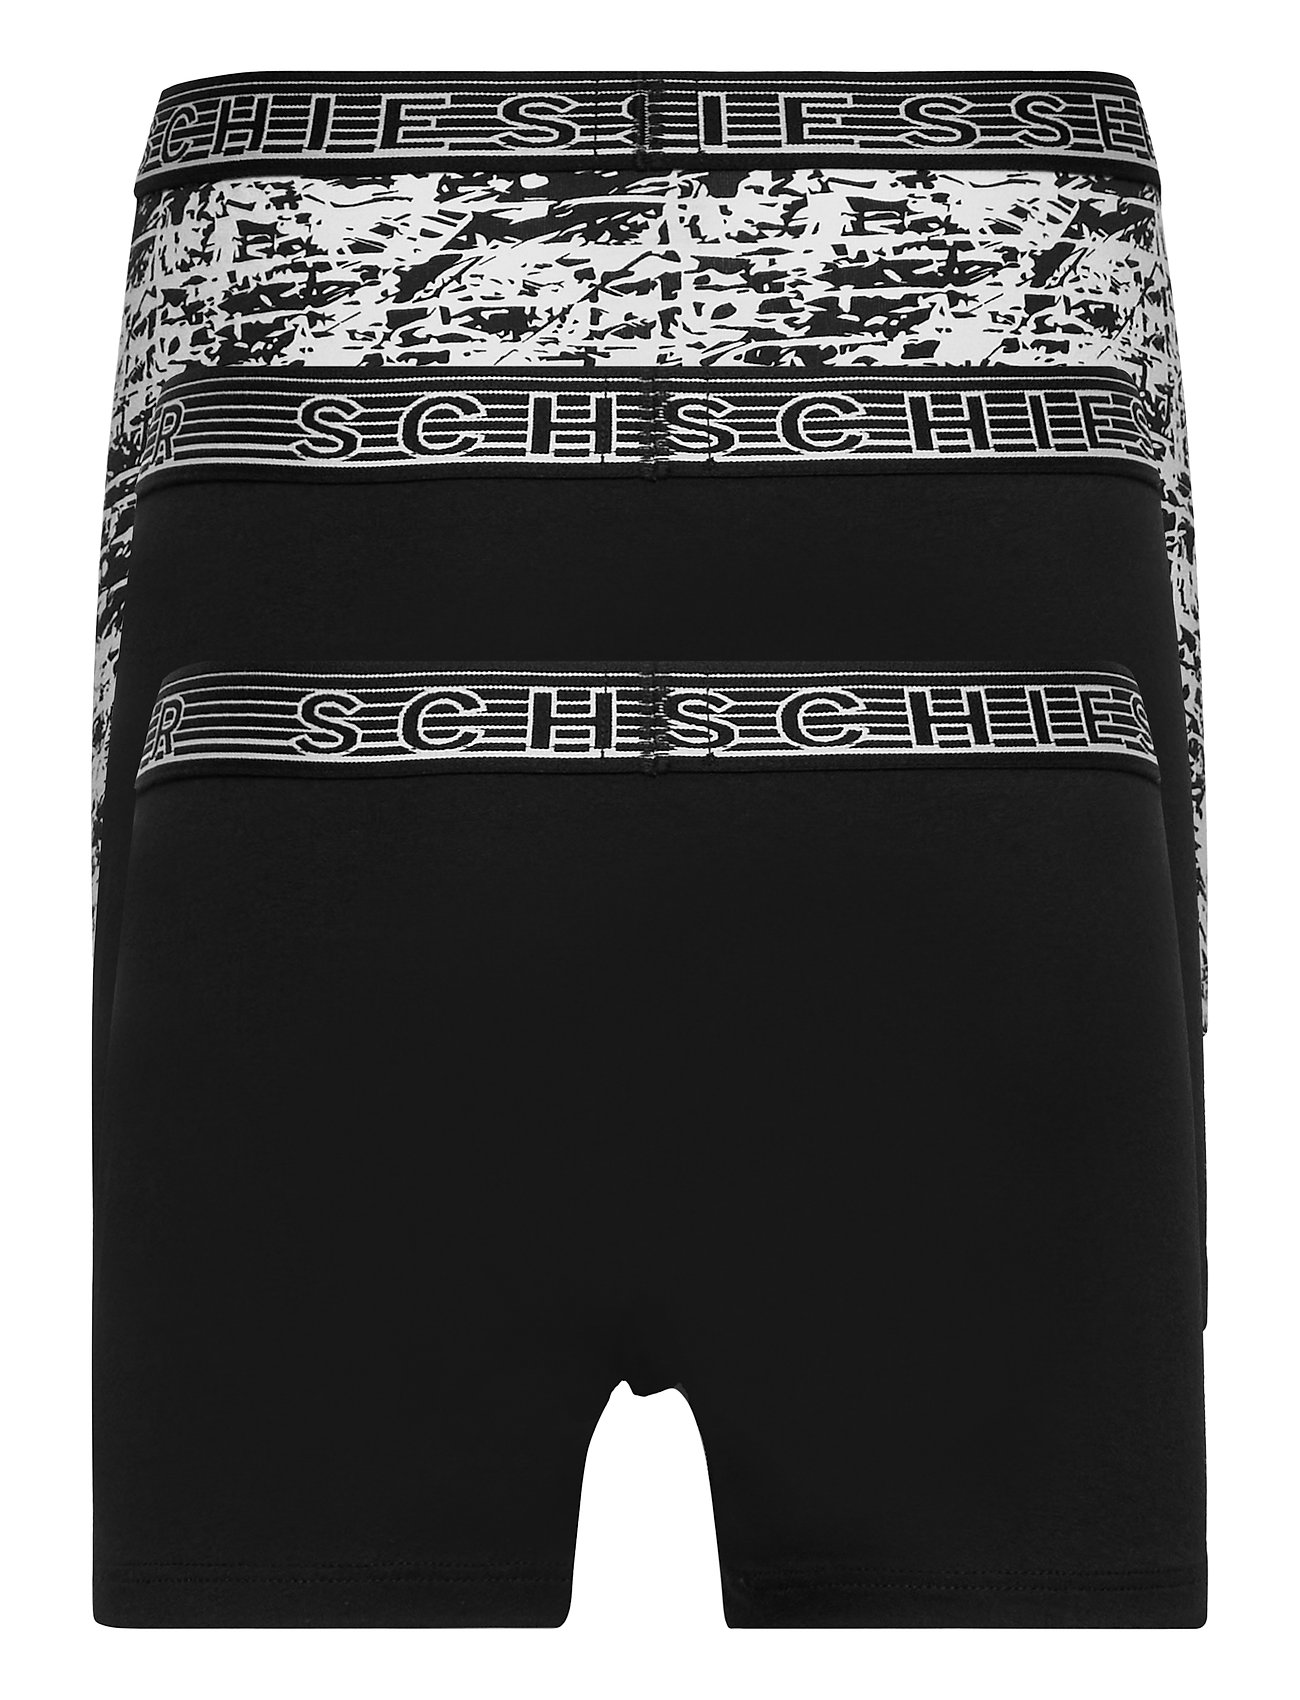 Schiesser - Shorts - underpants - assorted 2 - 1